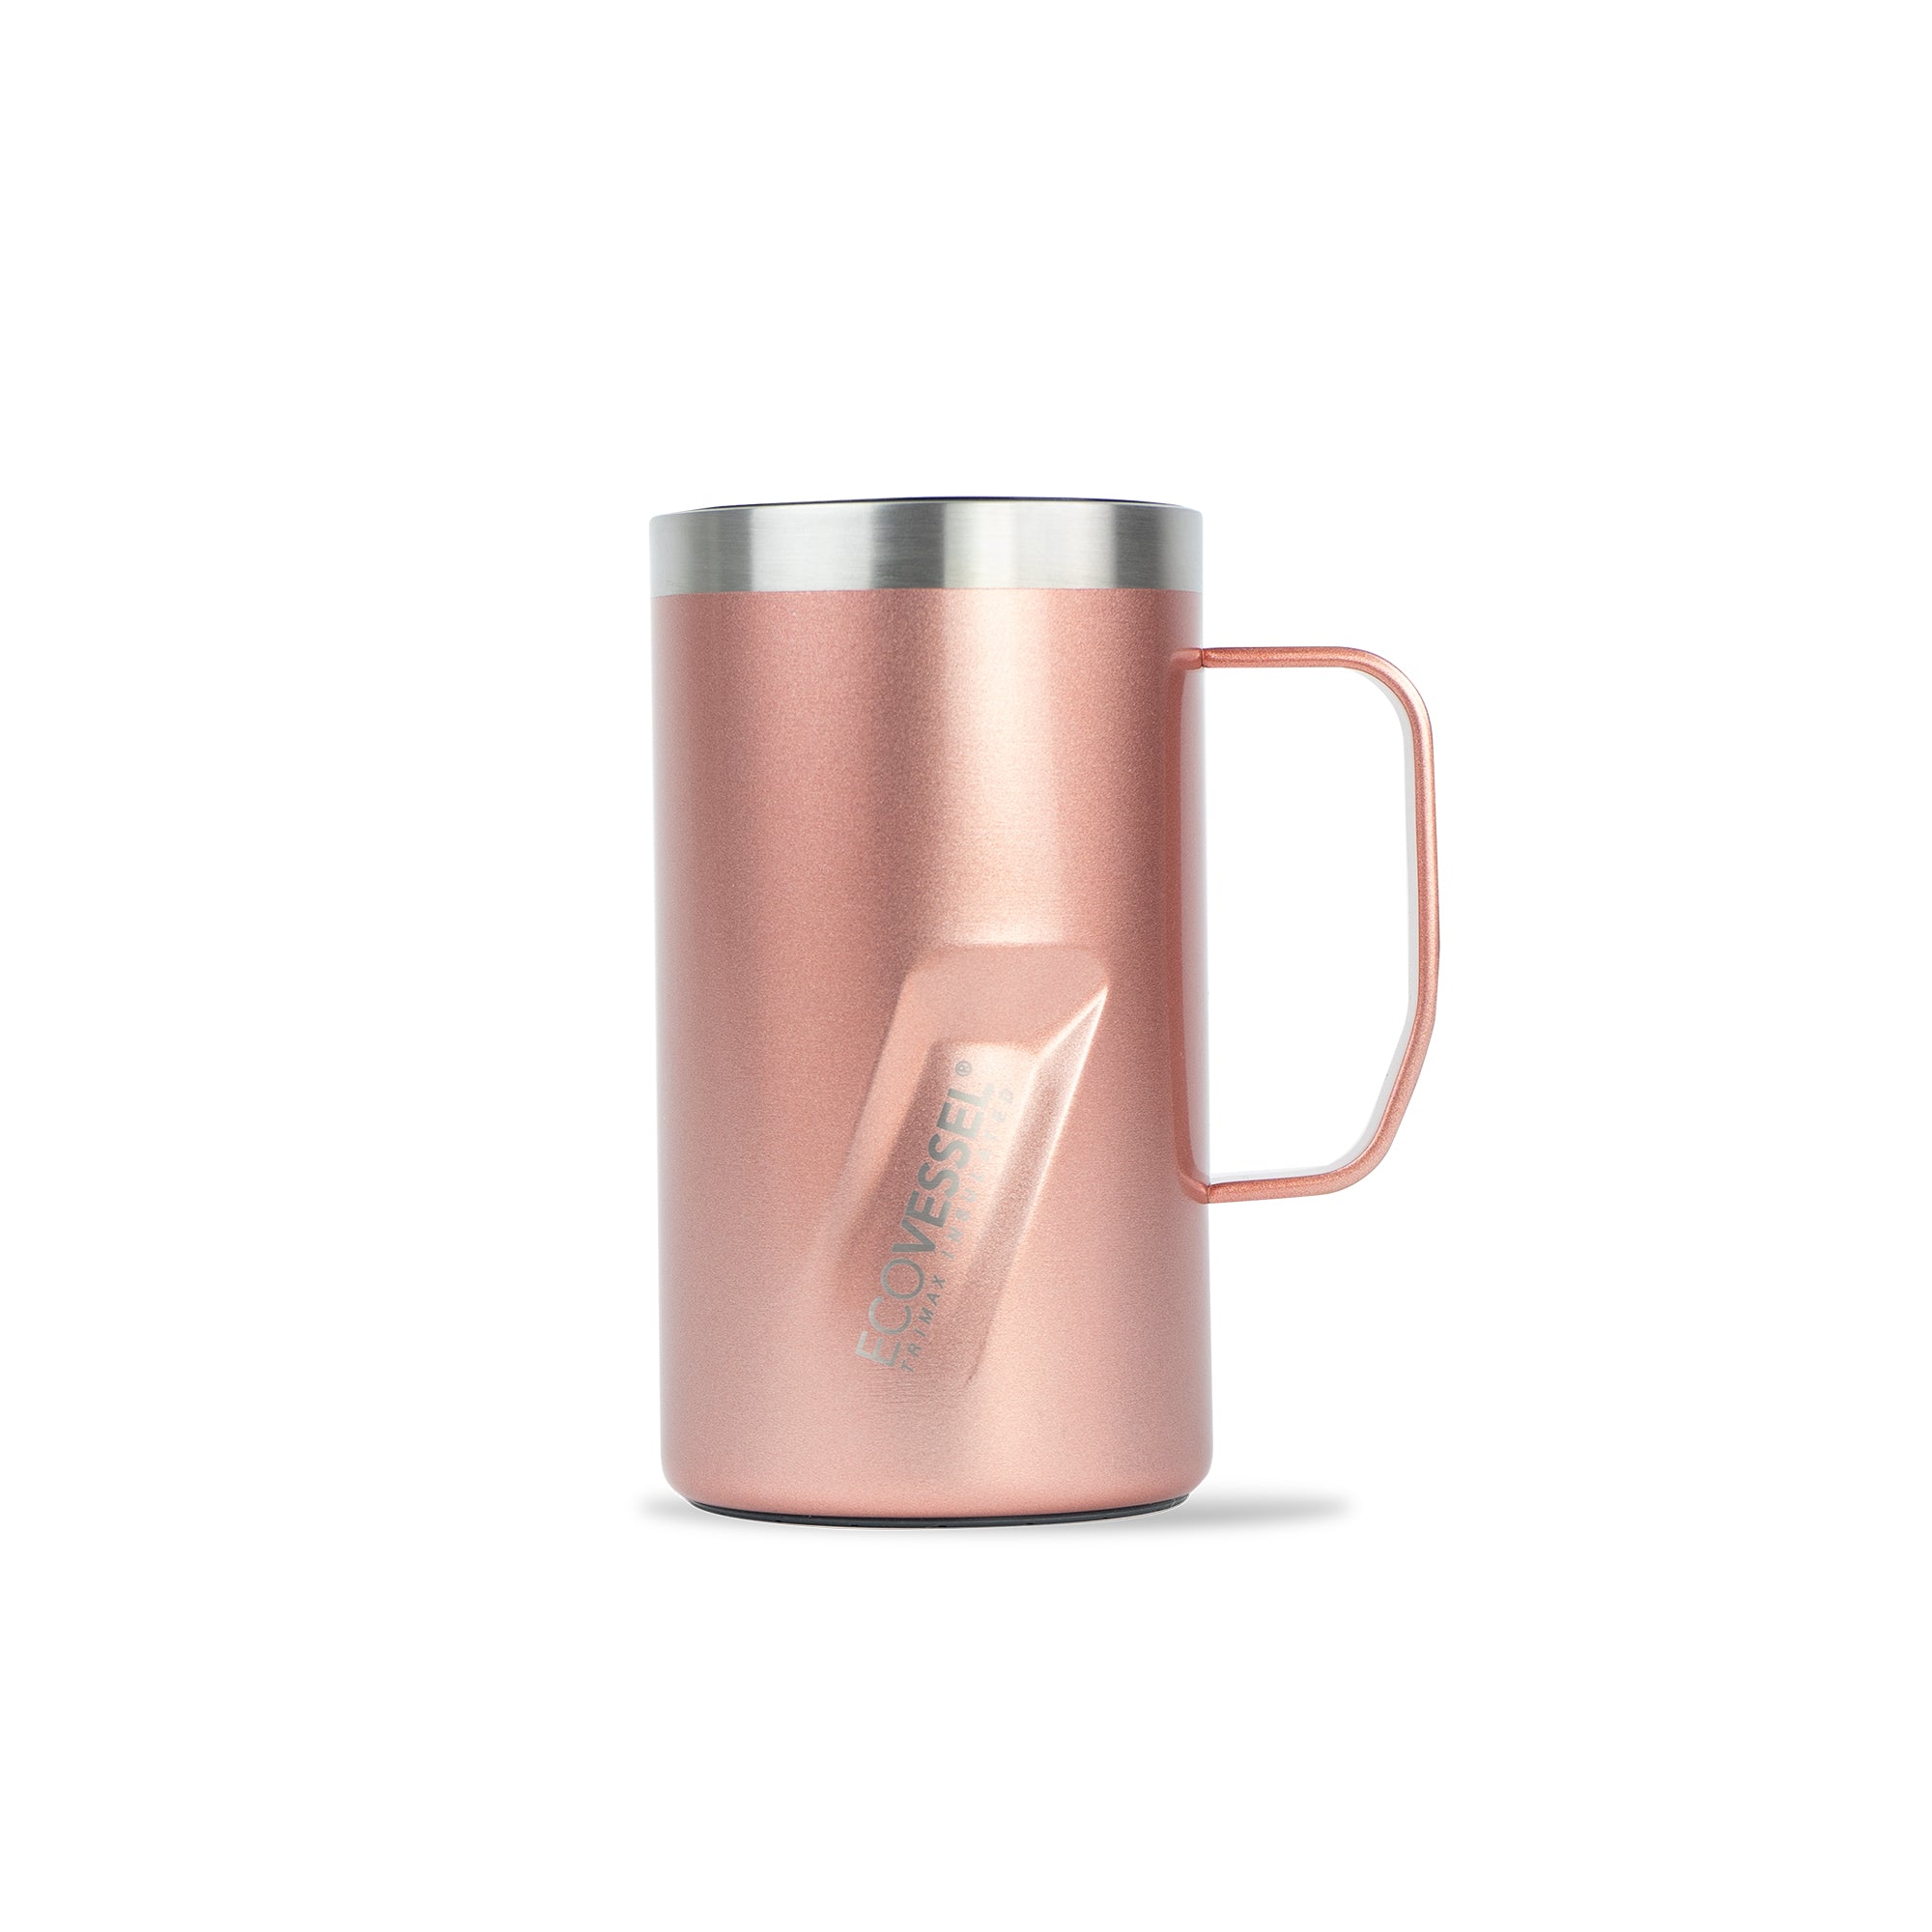 THE TRANSIT - Insulated Coffee Mug / Beer Mug - 16 oz - Past